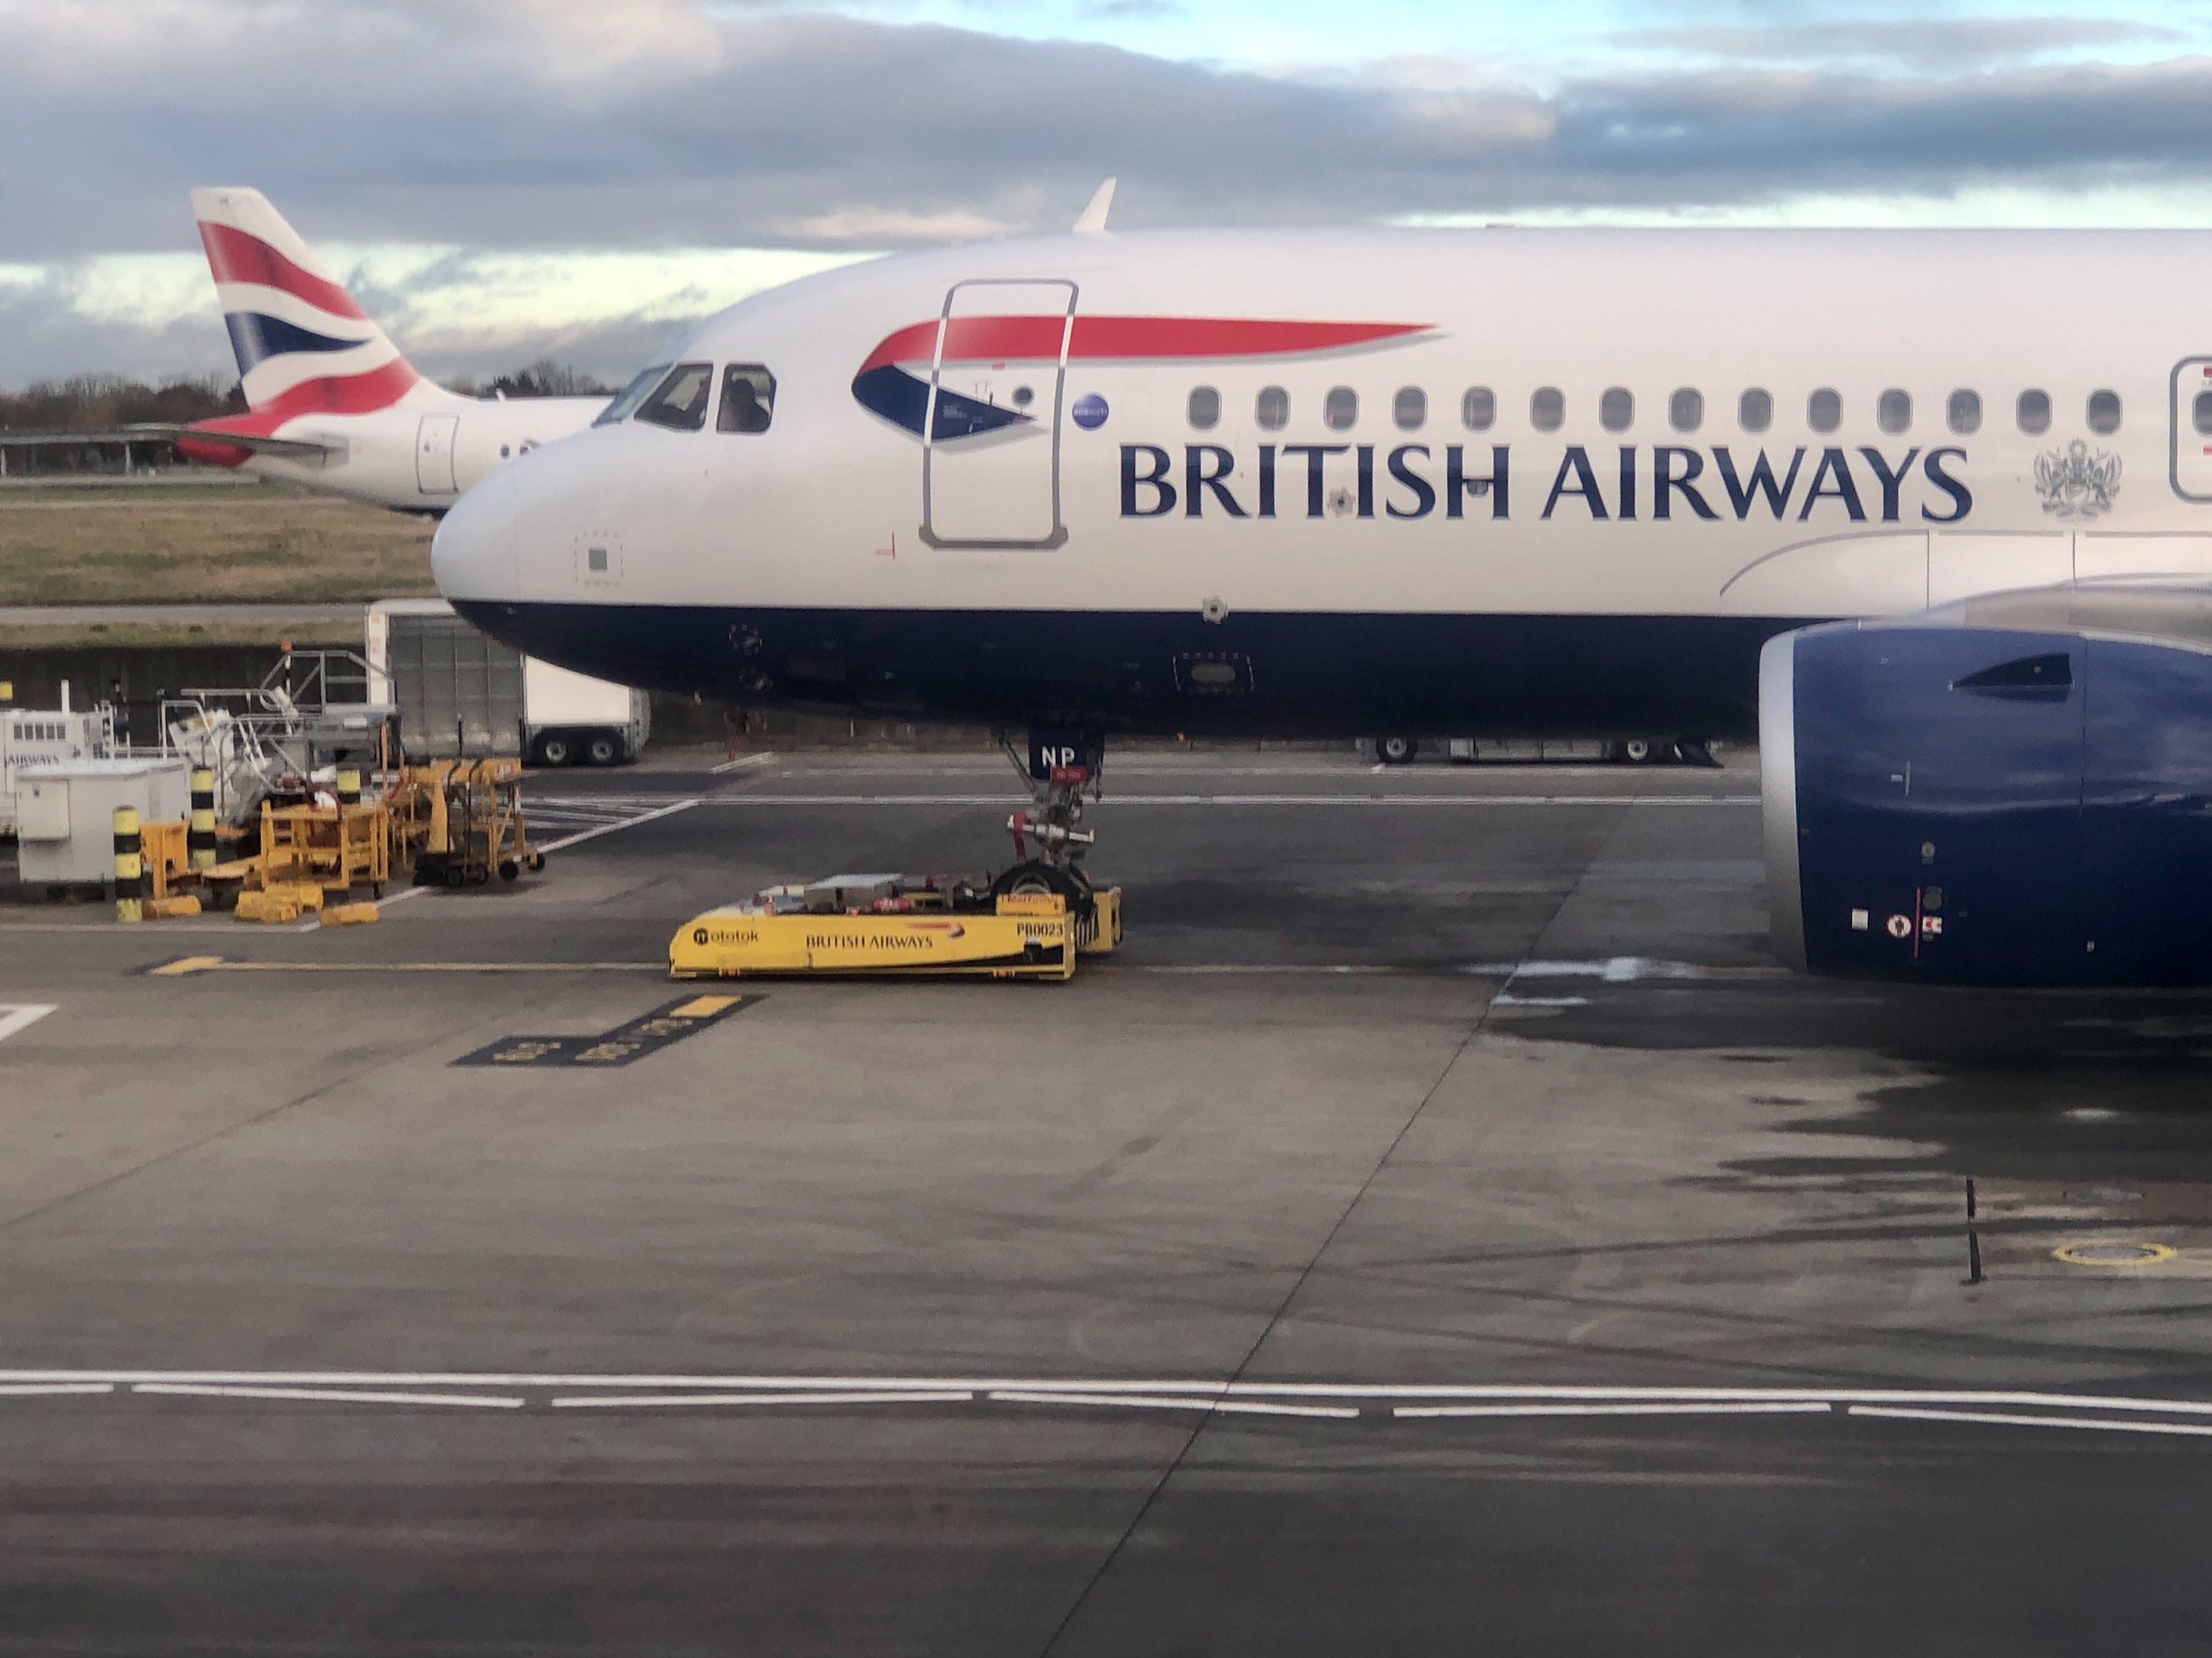 Arriving soon: British Airways aircraft at Heathrow Terminal 5